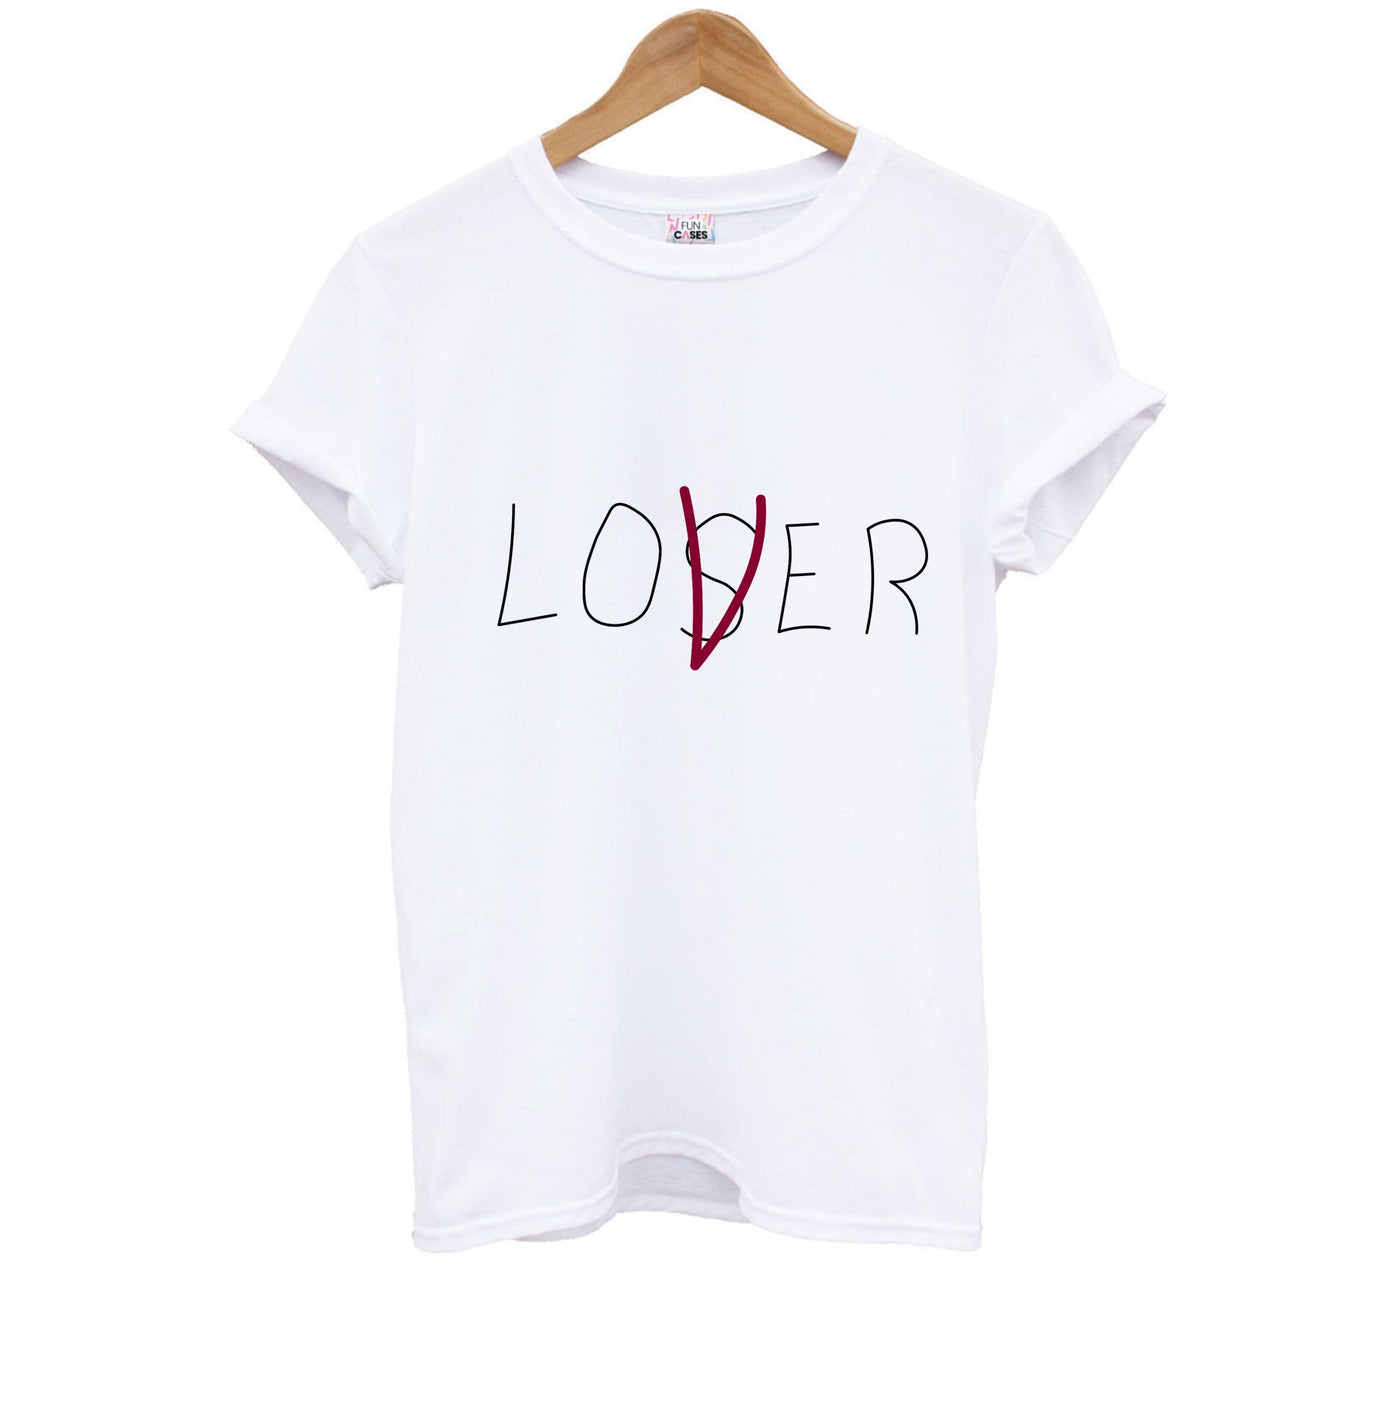 Loser - IT The Clown Kids T-Shirt